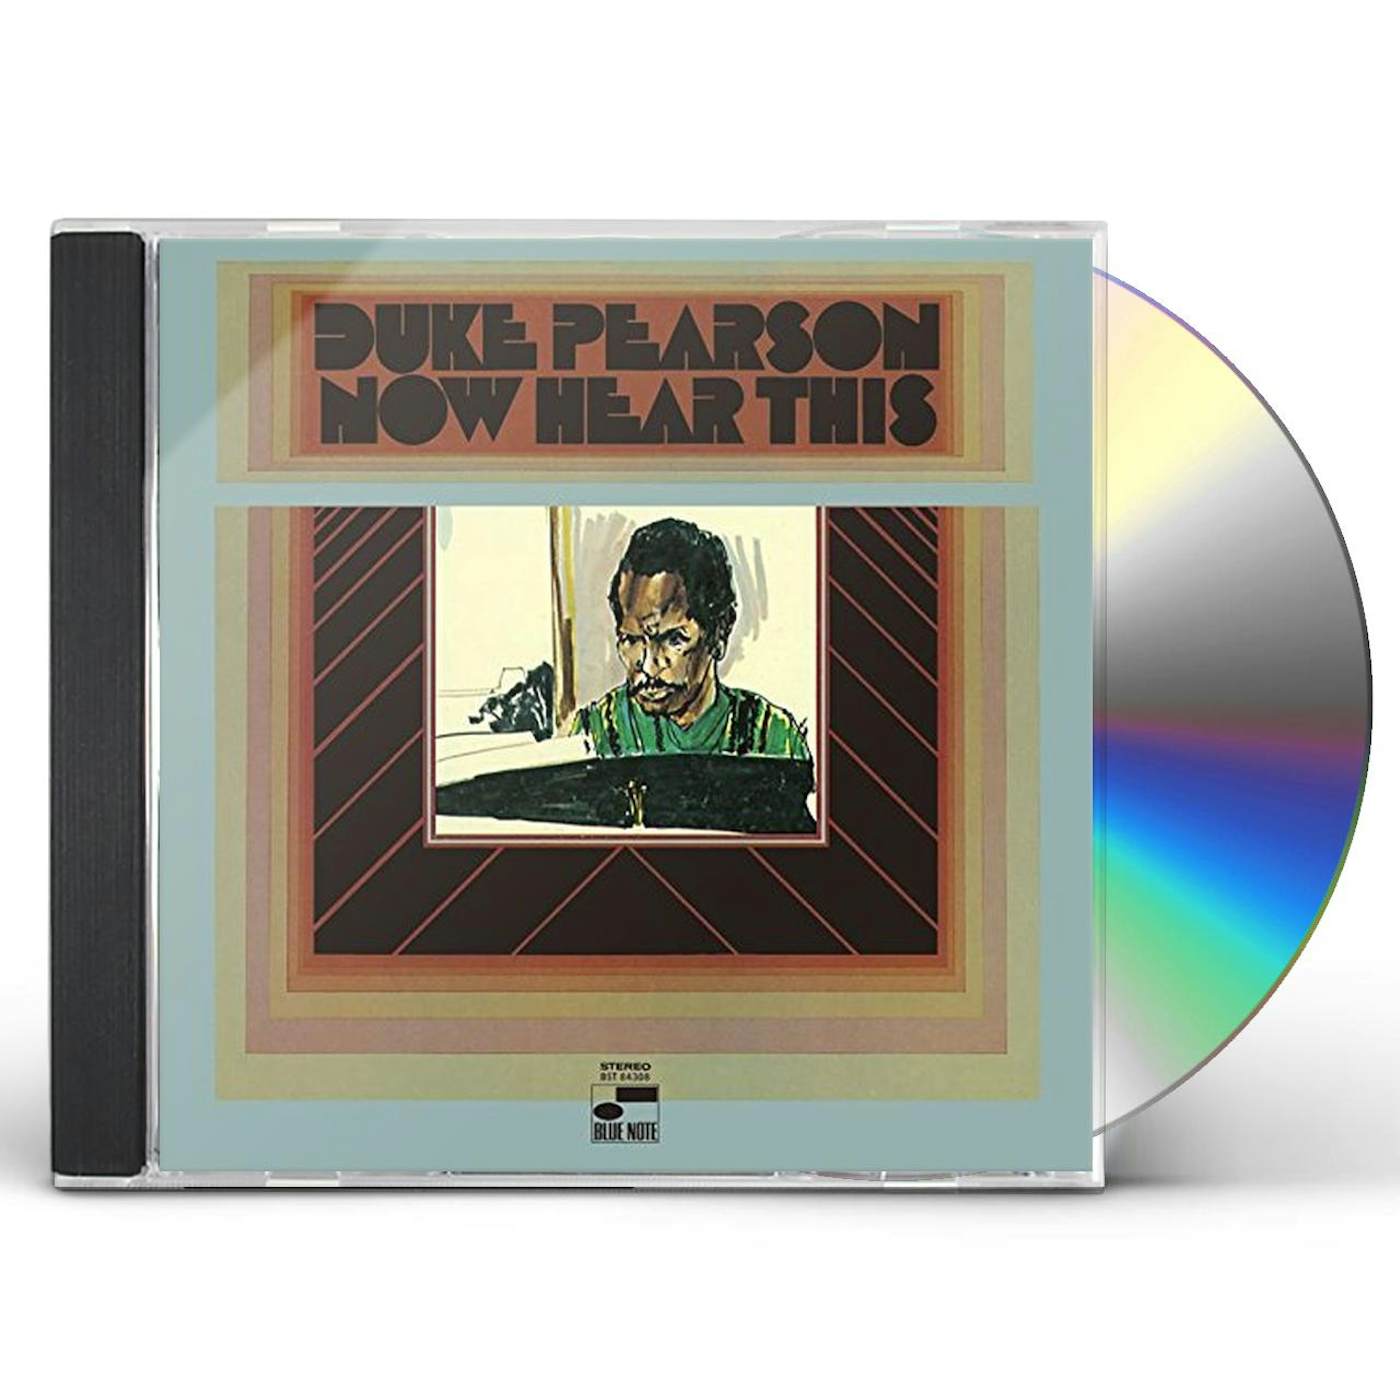 Duke Pearson NOW HERE THIS CD